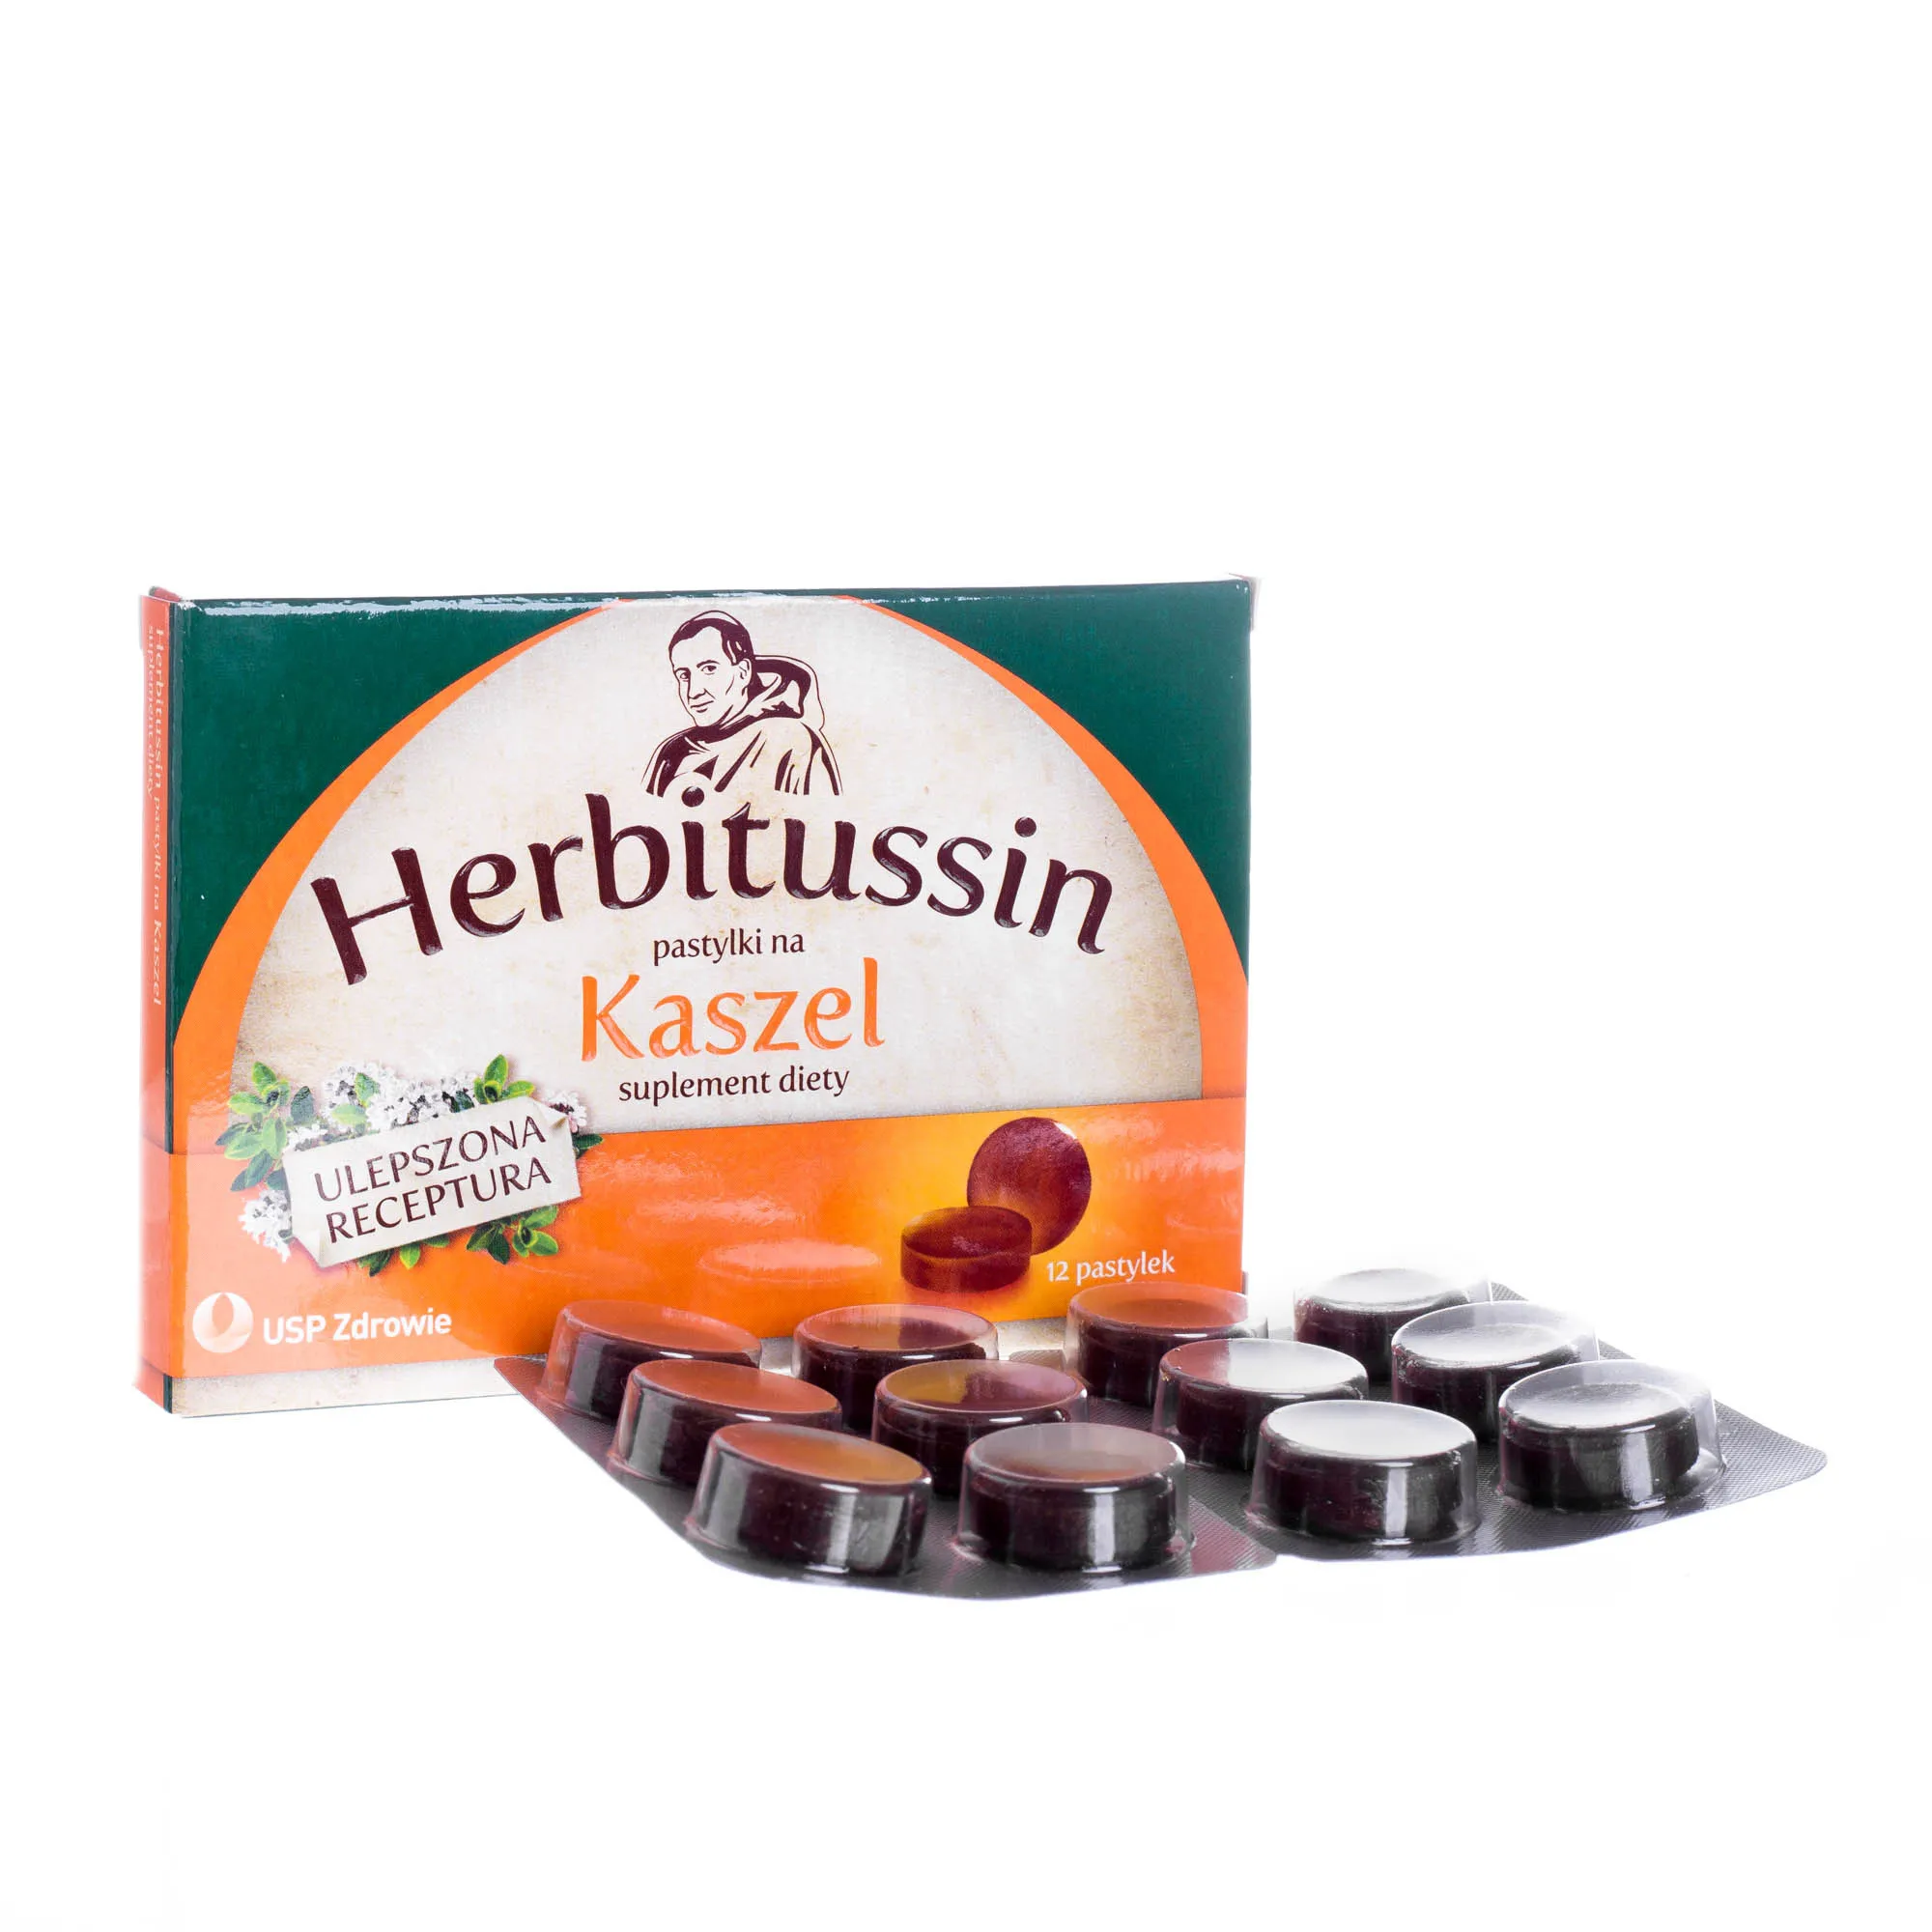 Herbitussin - pastylki do ssania na kaszel, 12 szt.